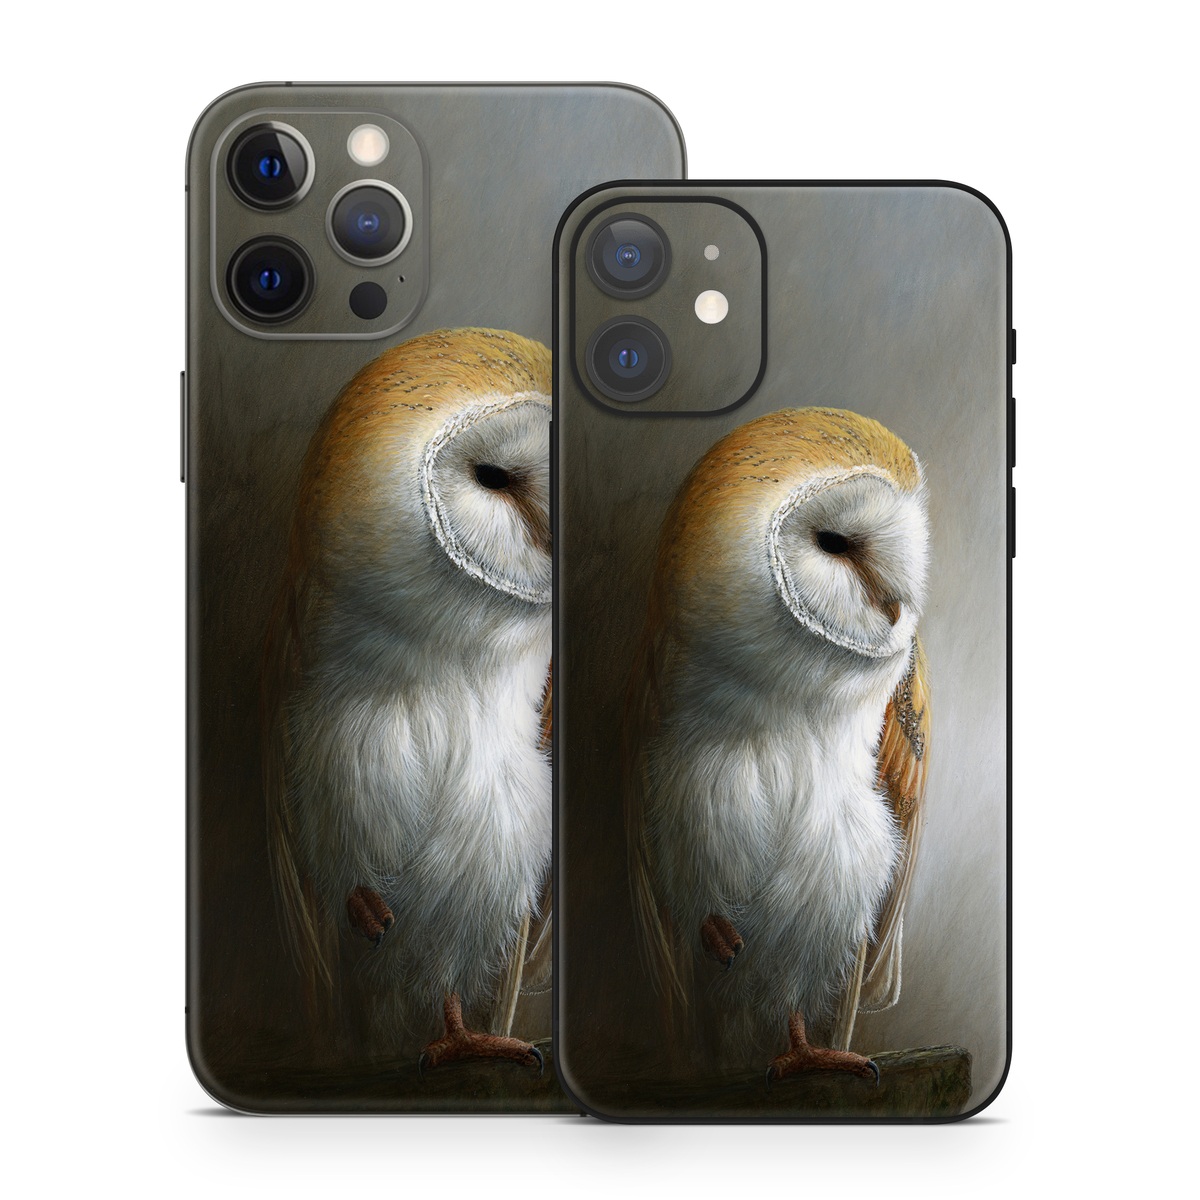 iPhone 12 Series Skin design of Barn owl, Owl, Bird, Bird of prey, Beak, Wildlife, with yellow, white, orange, brown colors